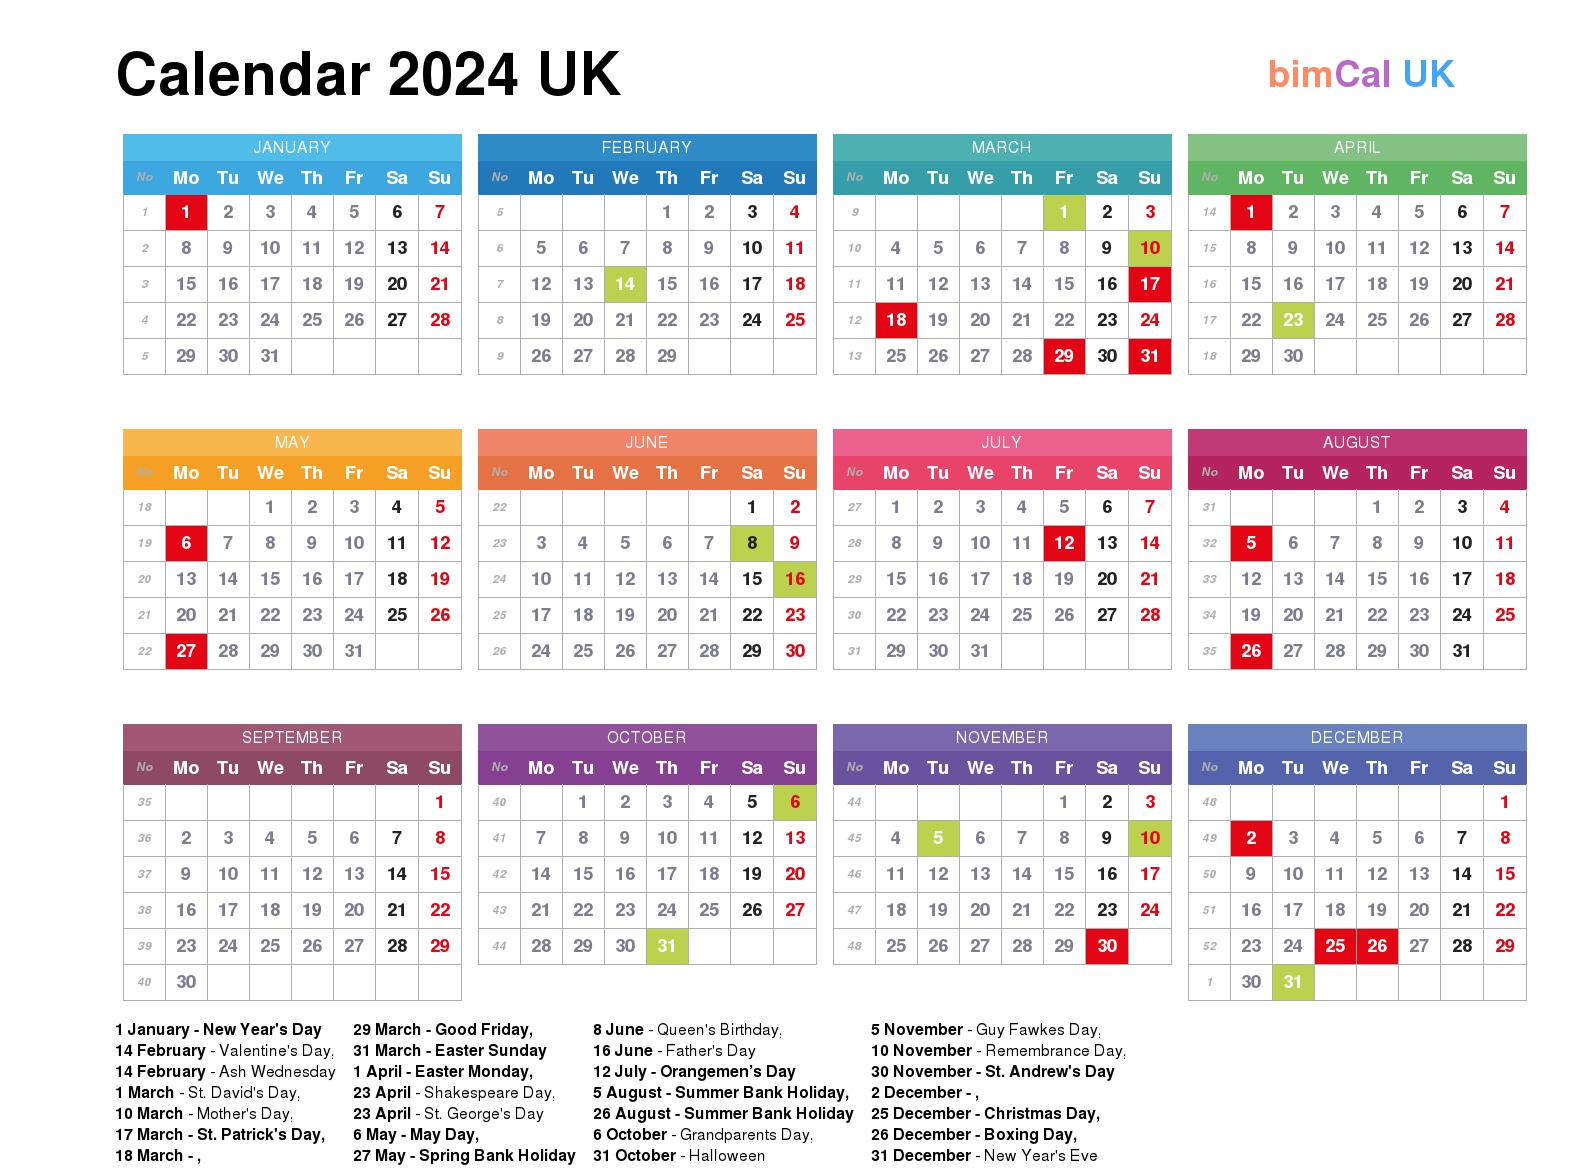 Calendar 2024 UK - bimCal.uk 🇬🇧